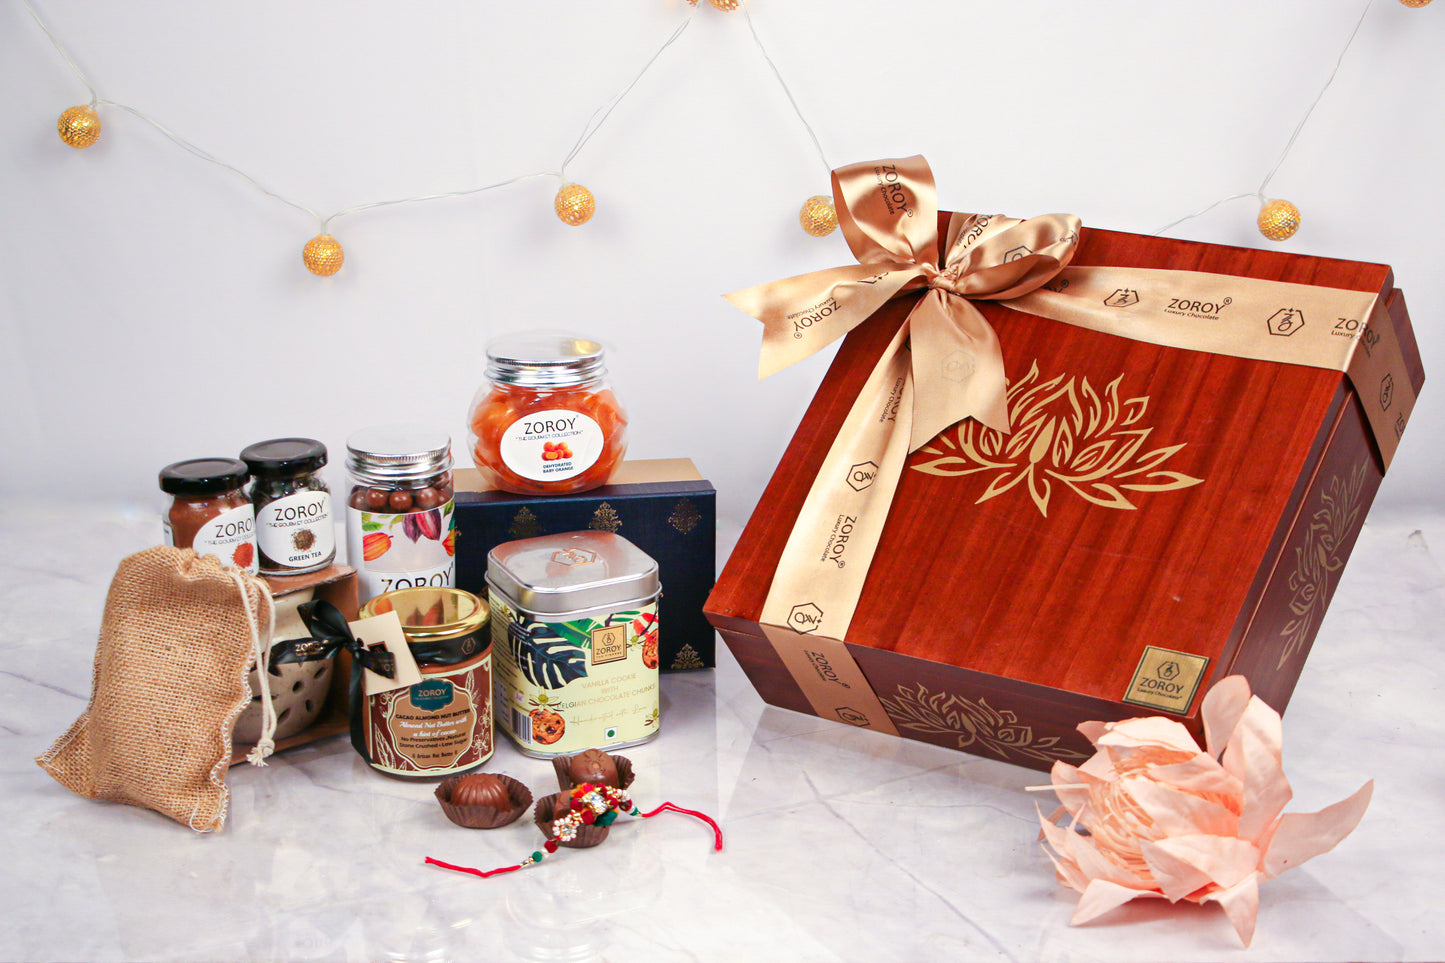 ZOROY Rakhi Hamper for Brother Sister | Wood Box Rakhi set with dry fruits | Happy Rakhi chocolate | Rakhi set for Bhaiya Bhabhi | Dried fruits | Rakhi gift combo | Rakshabandhan gift | Complimentary Rakhi | 900 Grams